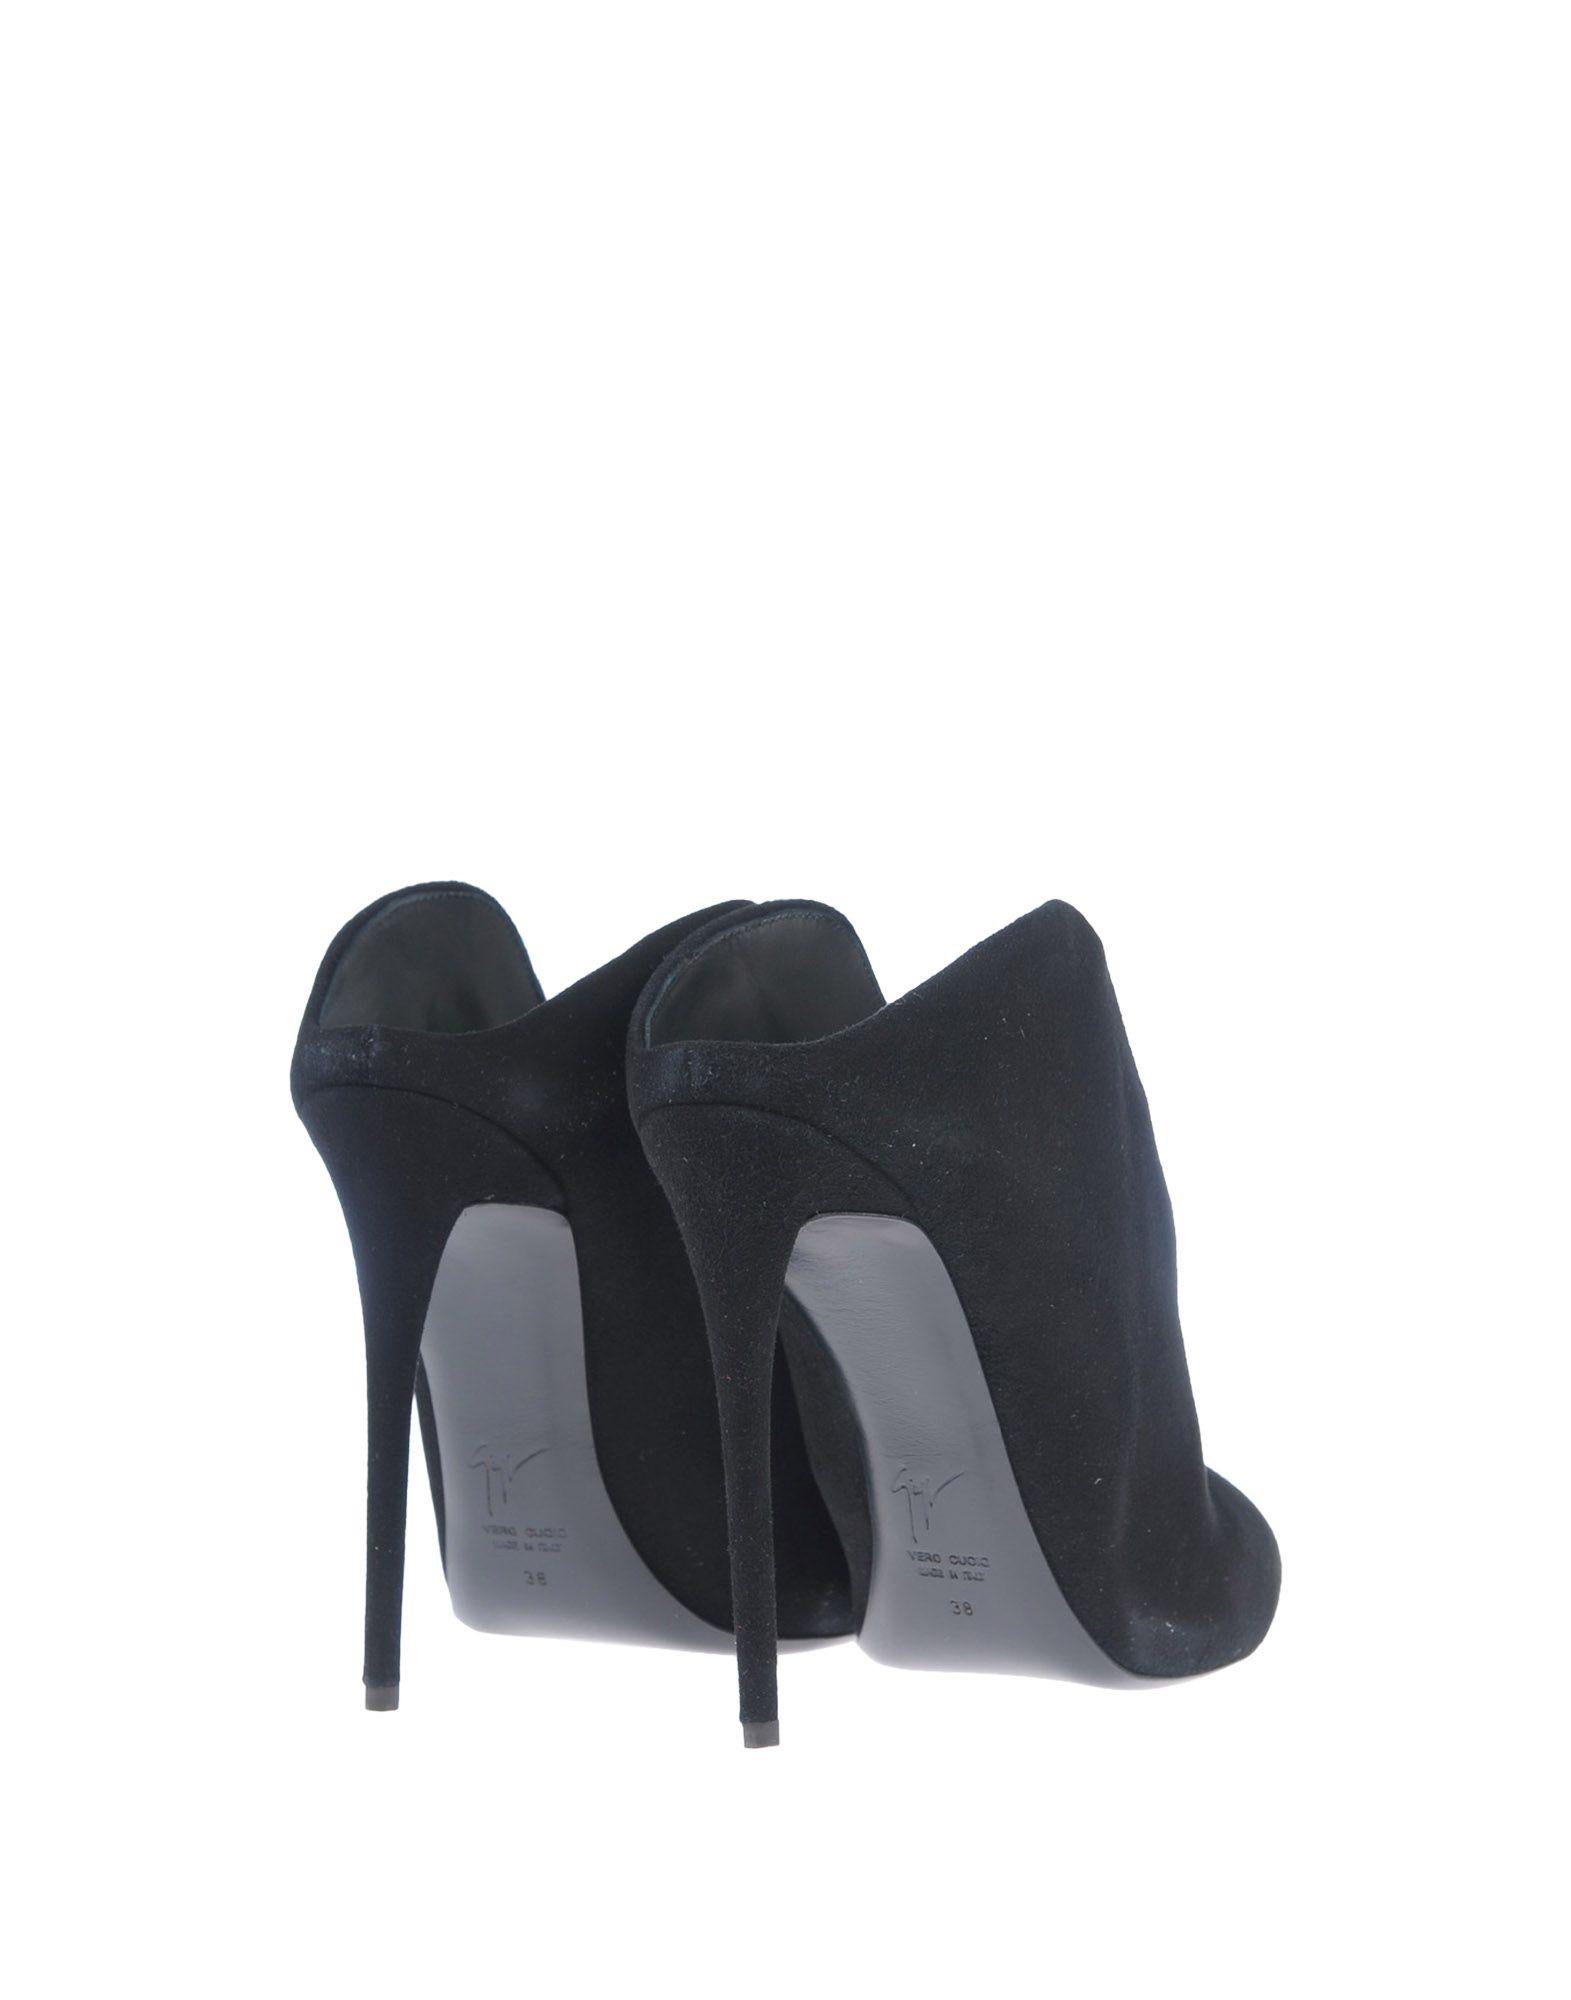 Giuseppe Zanotti NEW Black Suede Evening Sandals Slide In Mules Heels in Box 1